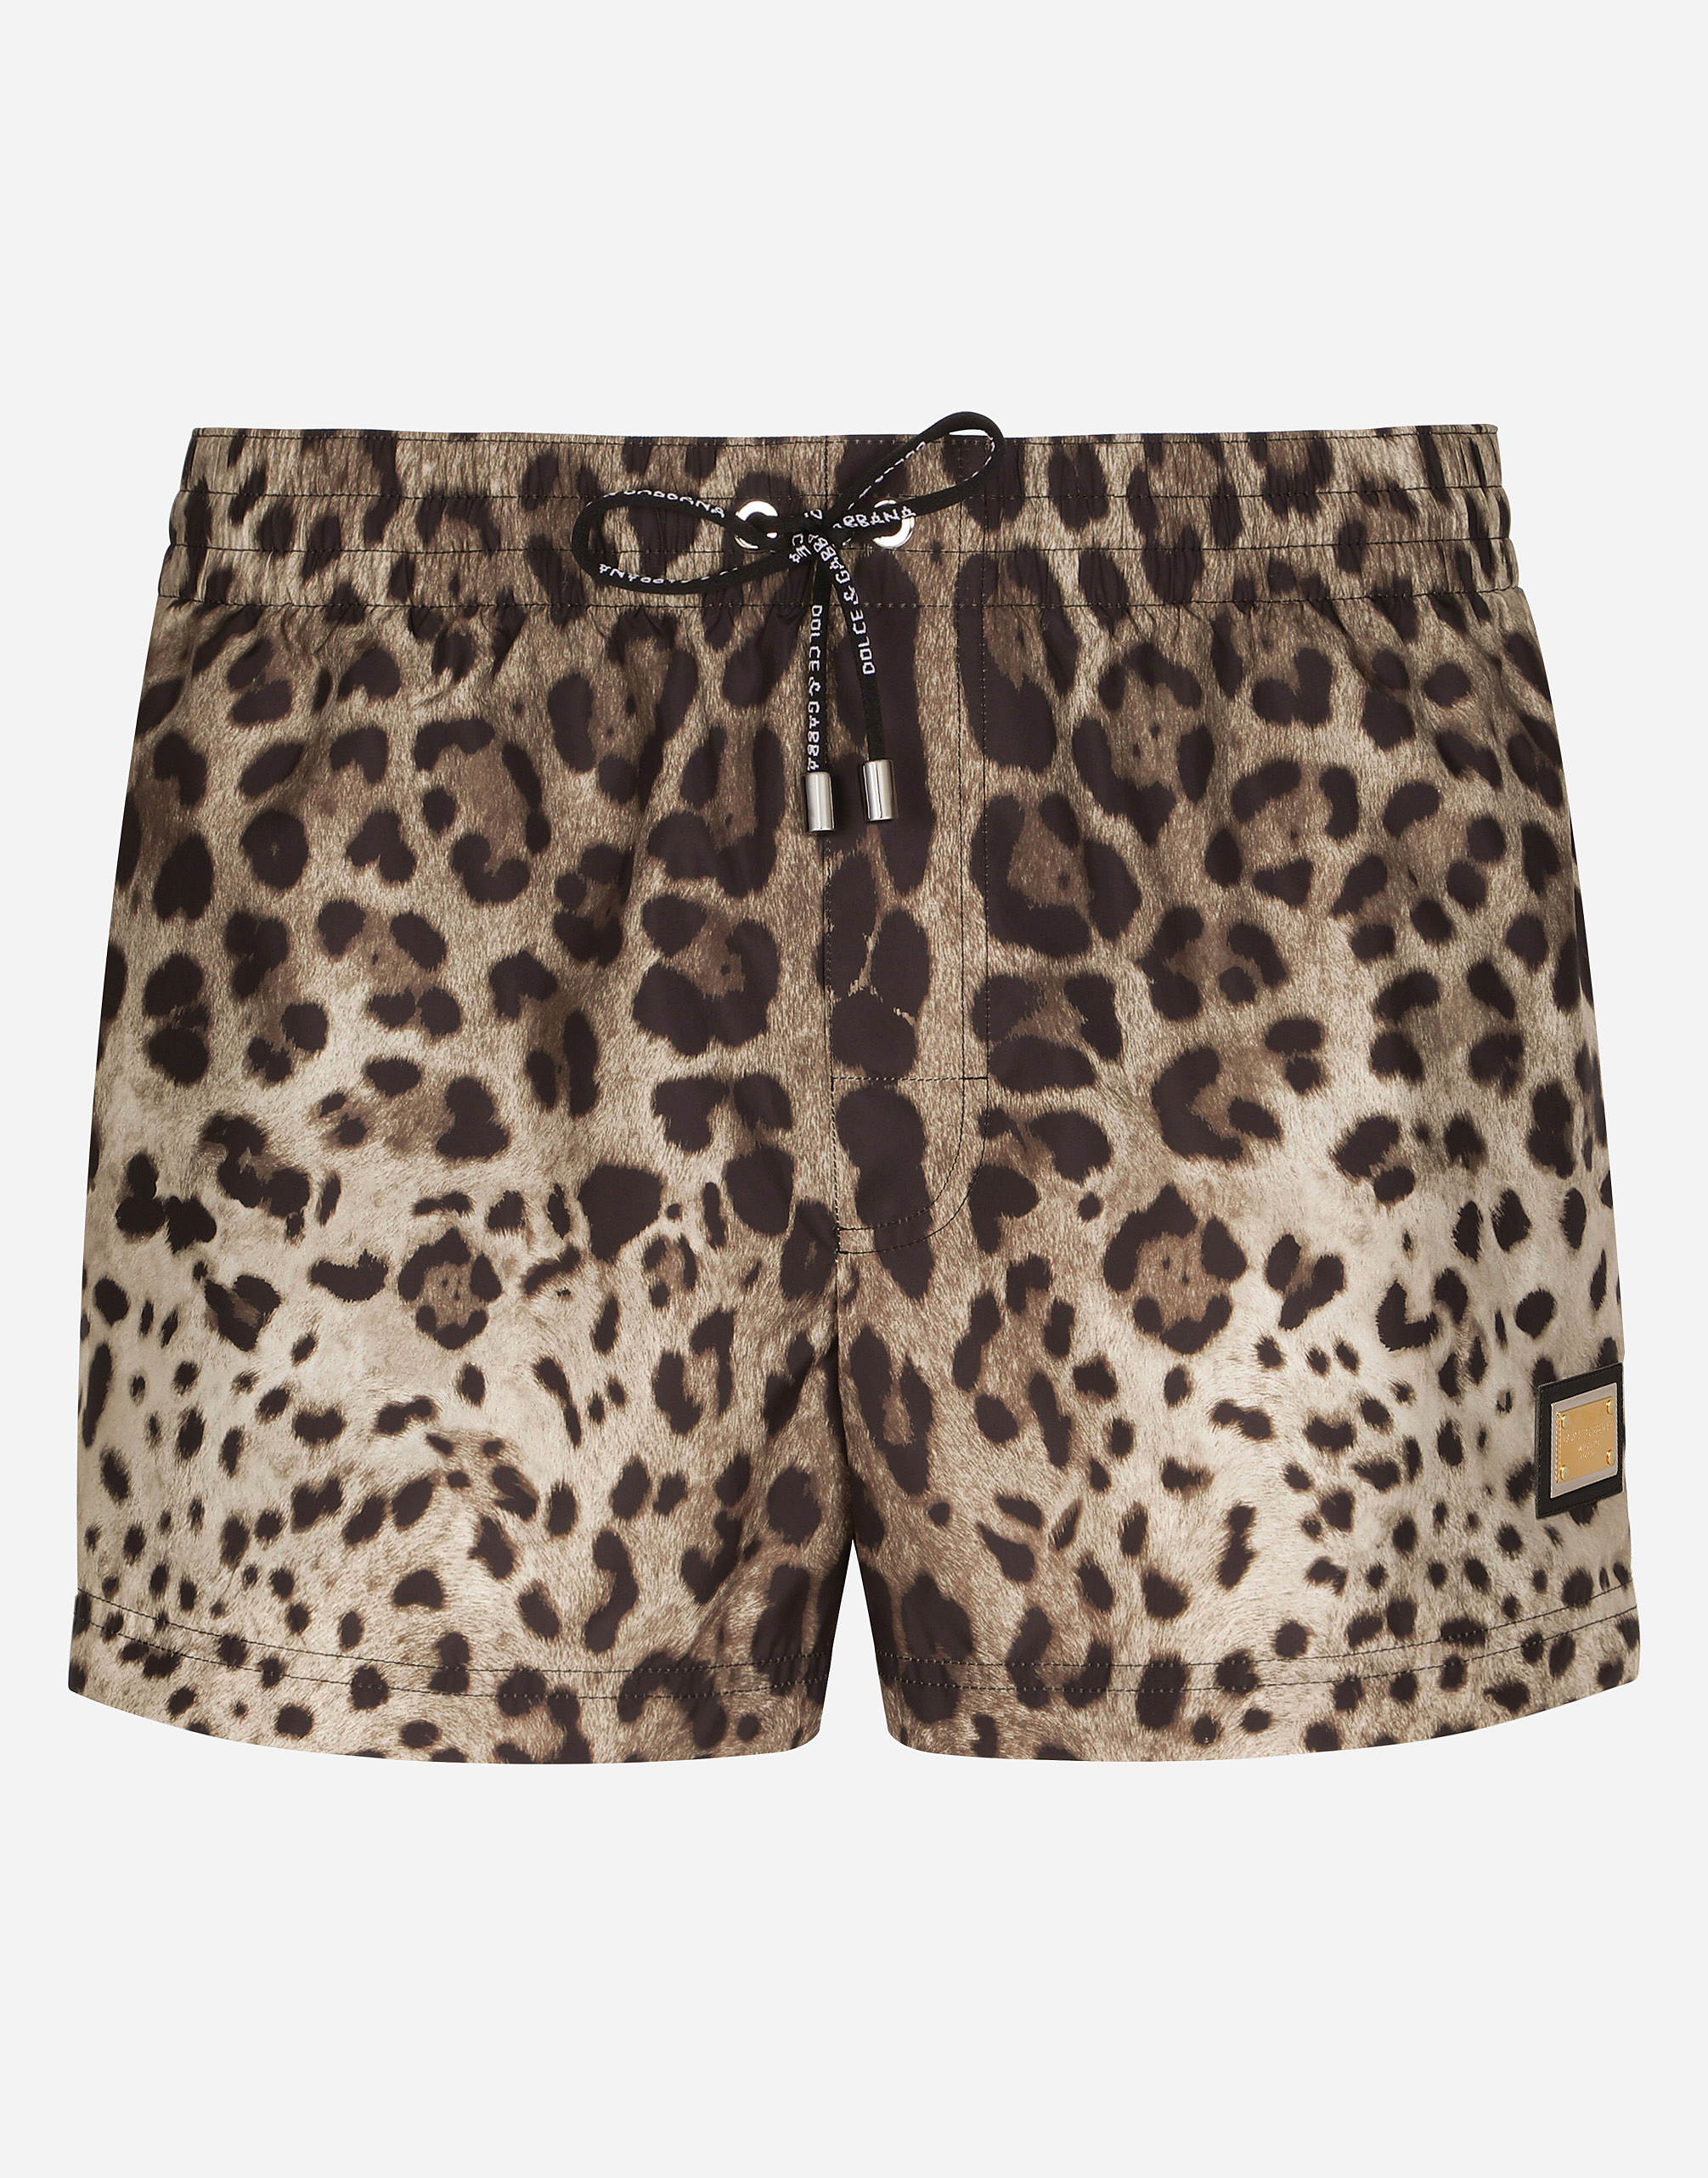 Short swim trunks with leopard print in Animal Print